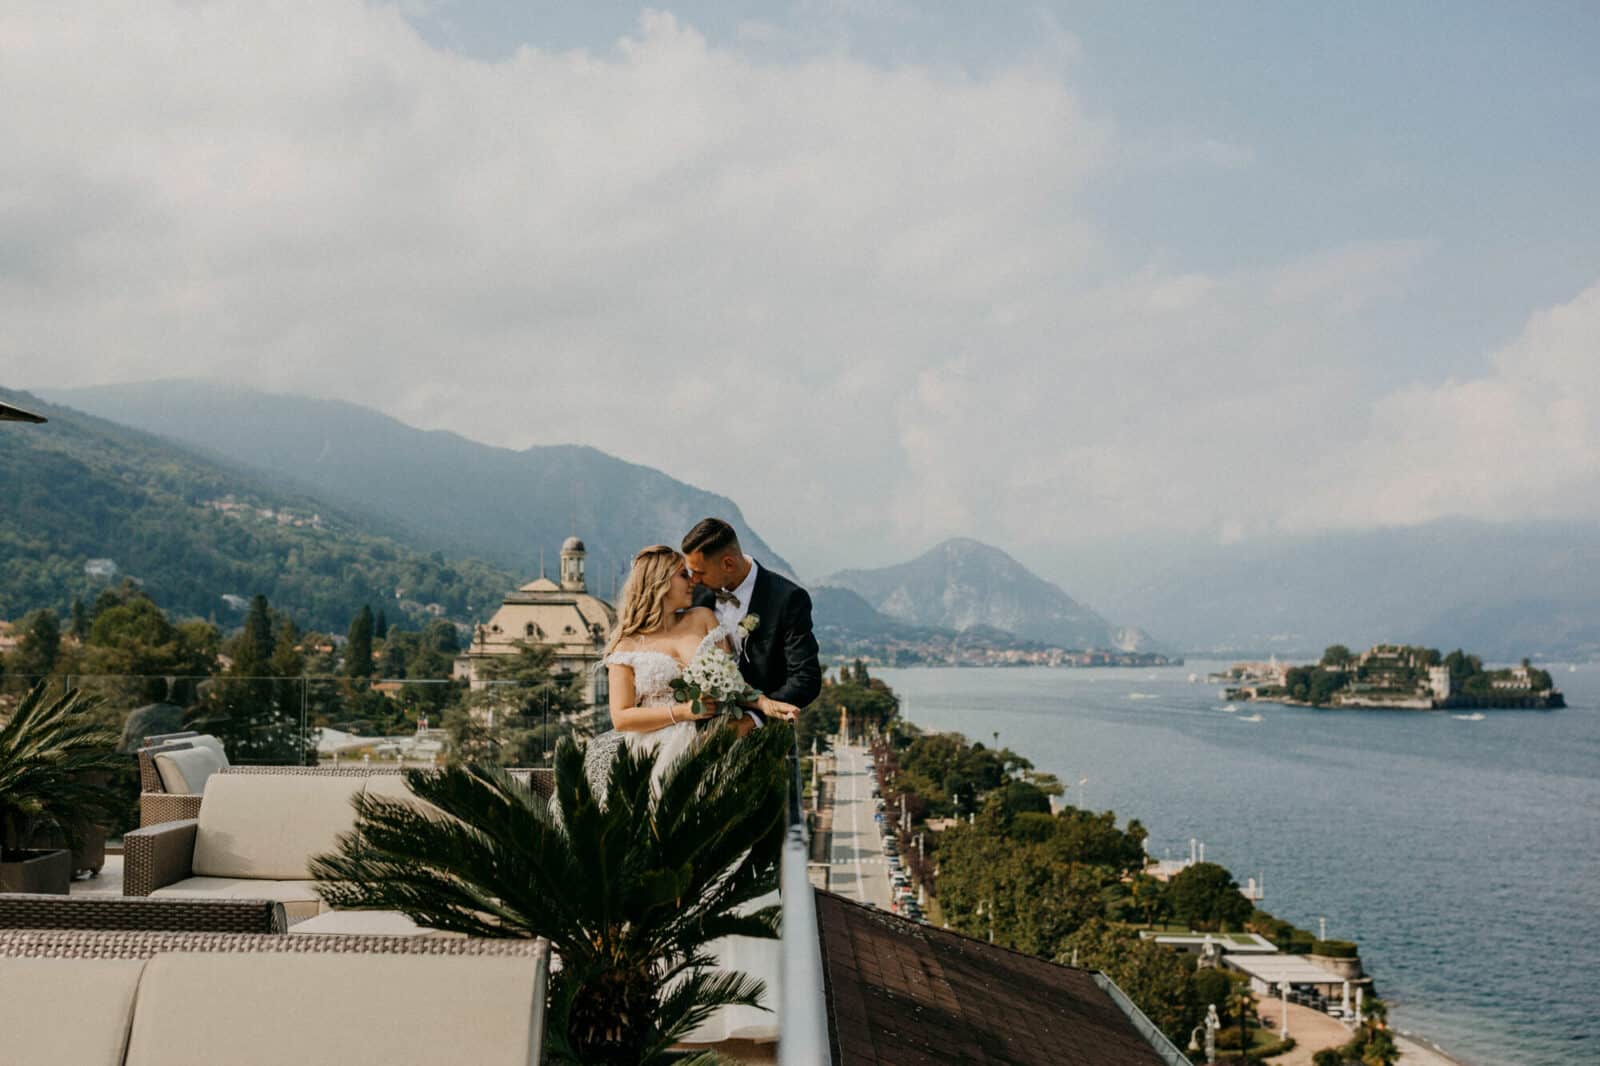 Matrimonio sul lago maggiore